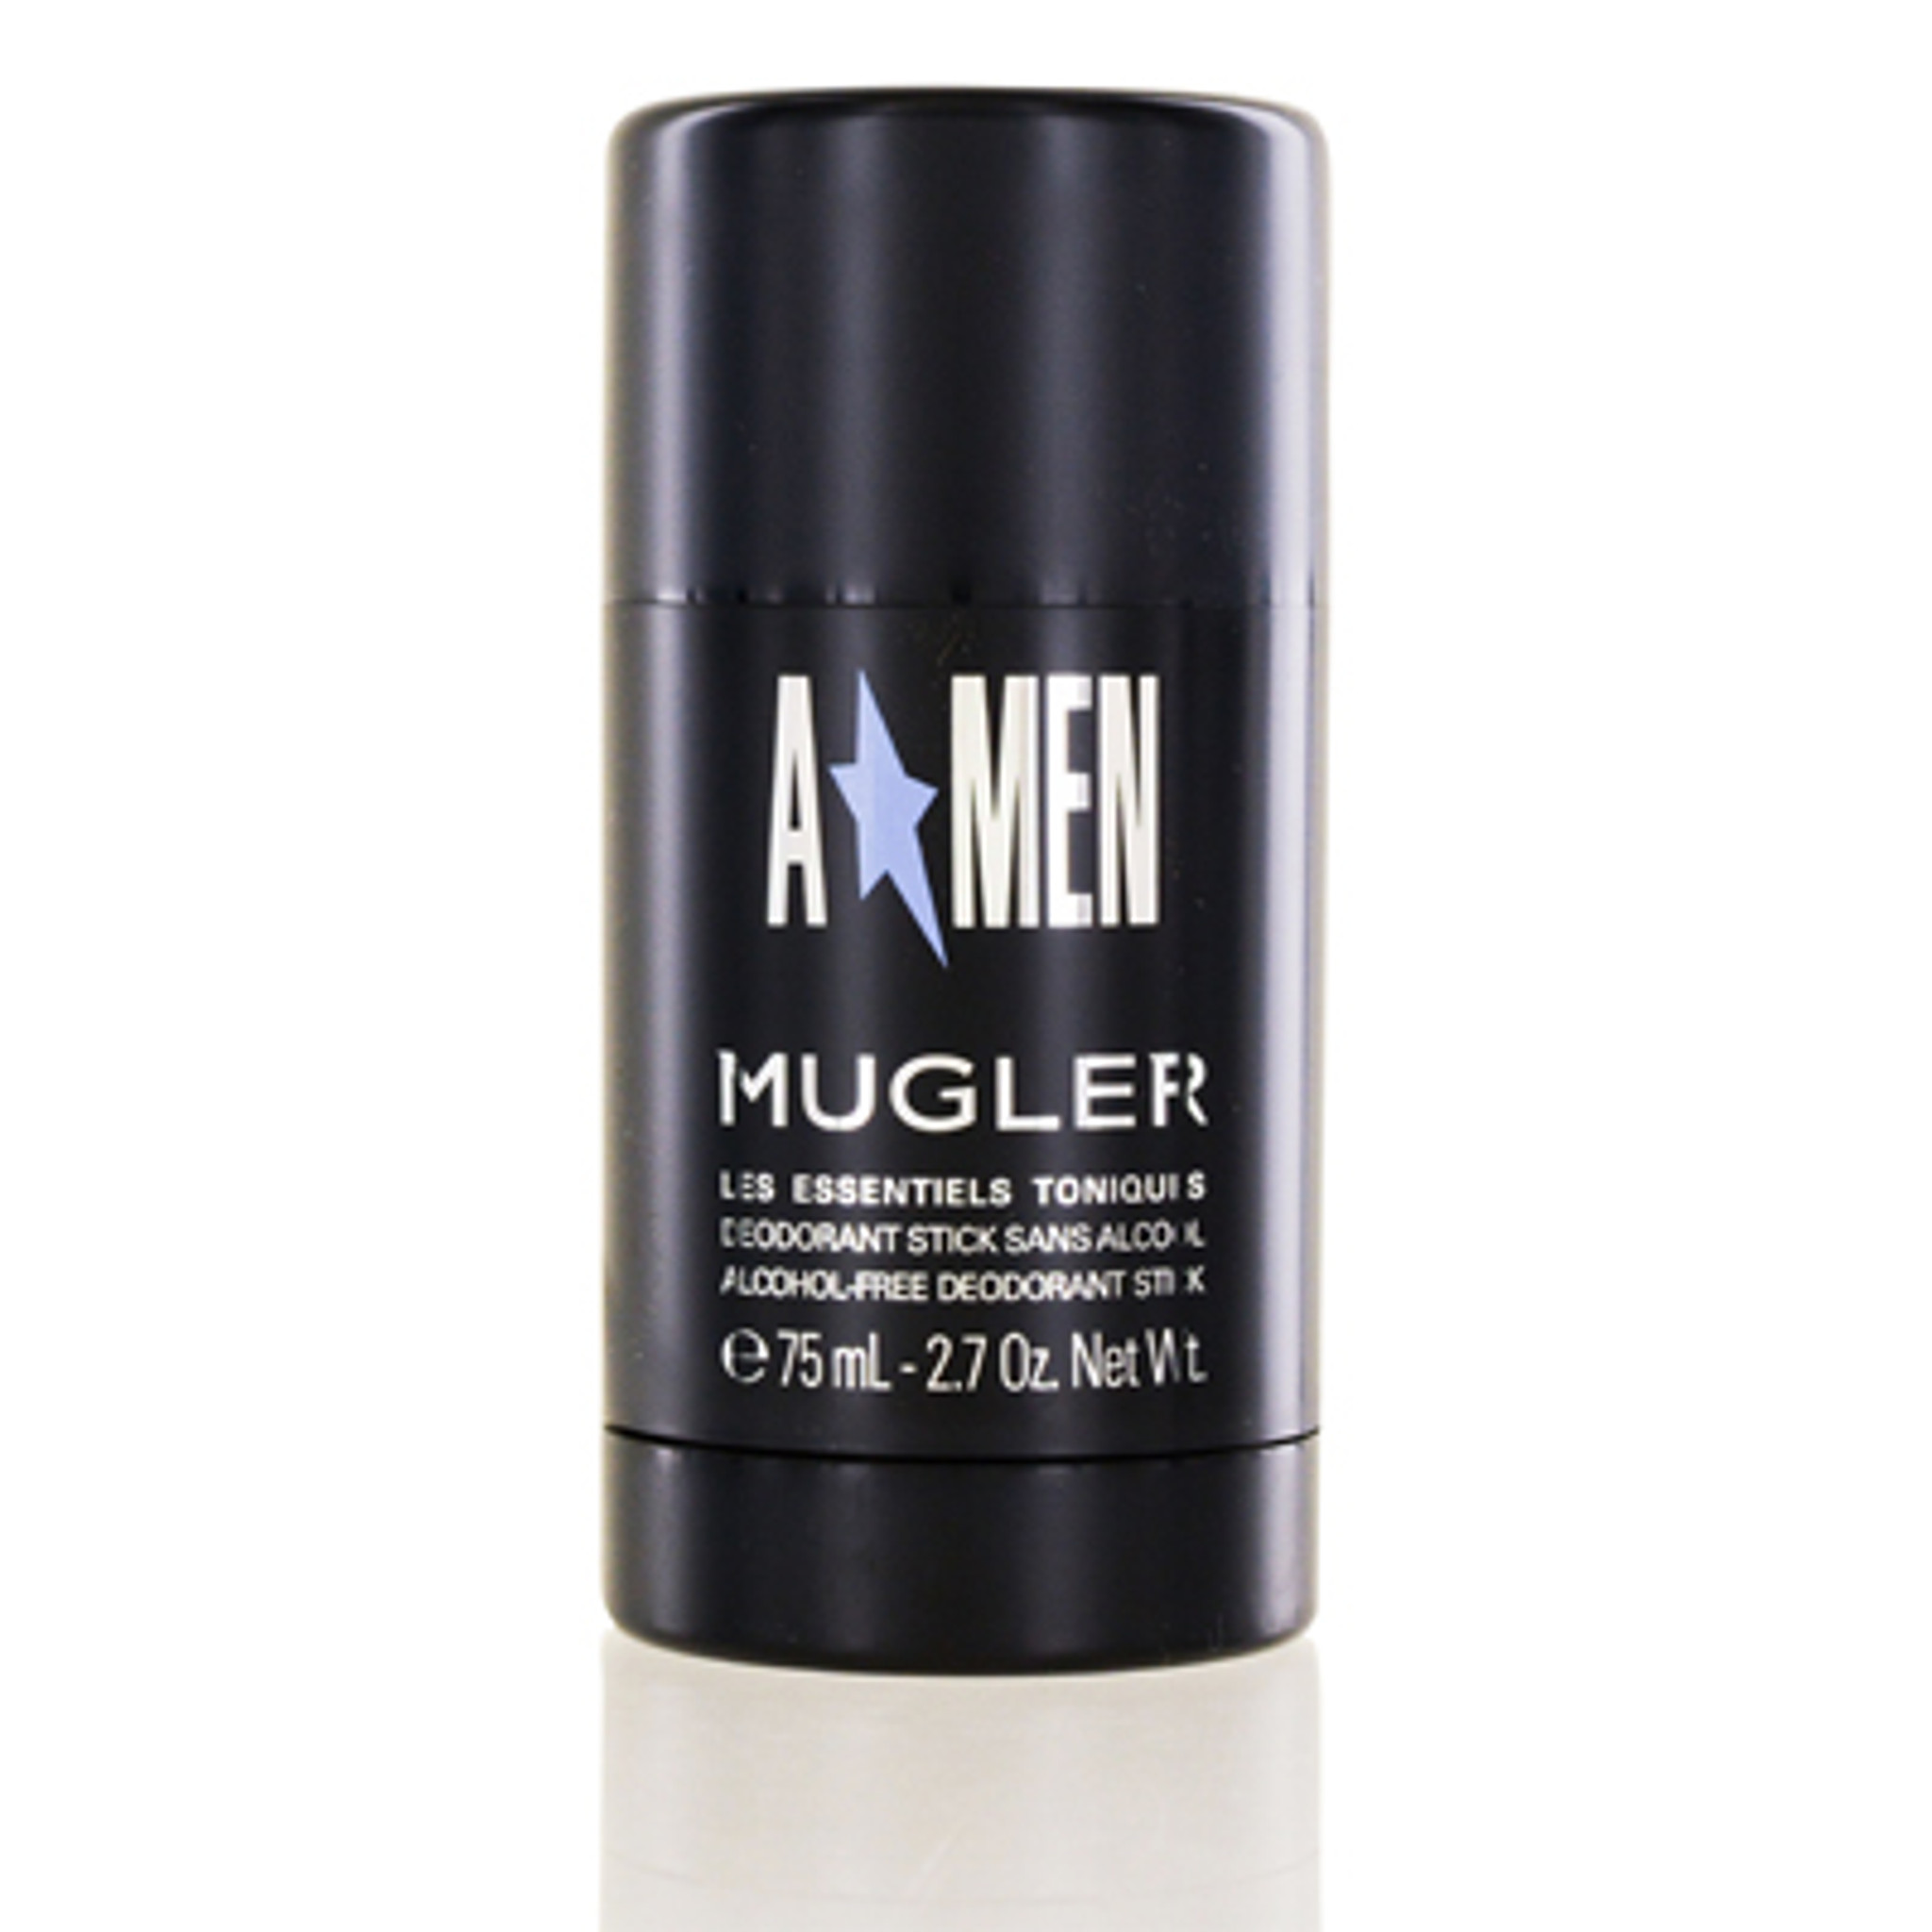 Thierry Mugler ANGMD25B Angel Men Deodorant Stick 2.5 oz for Men